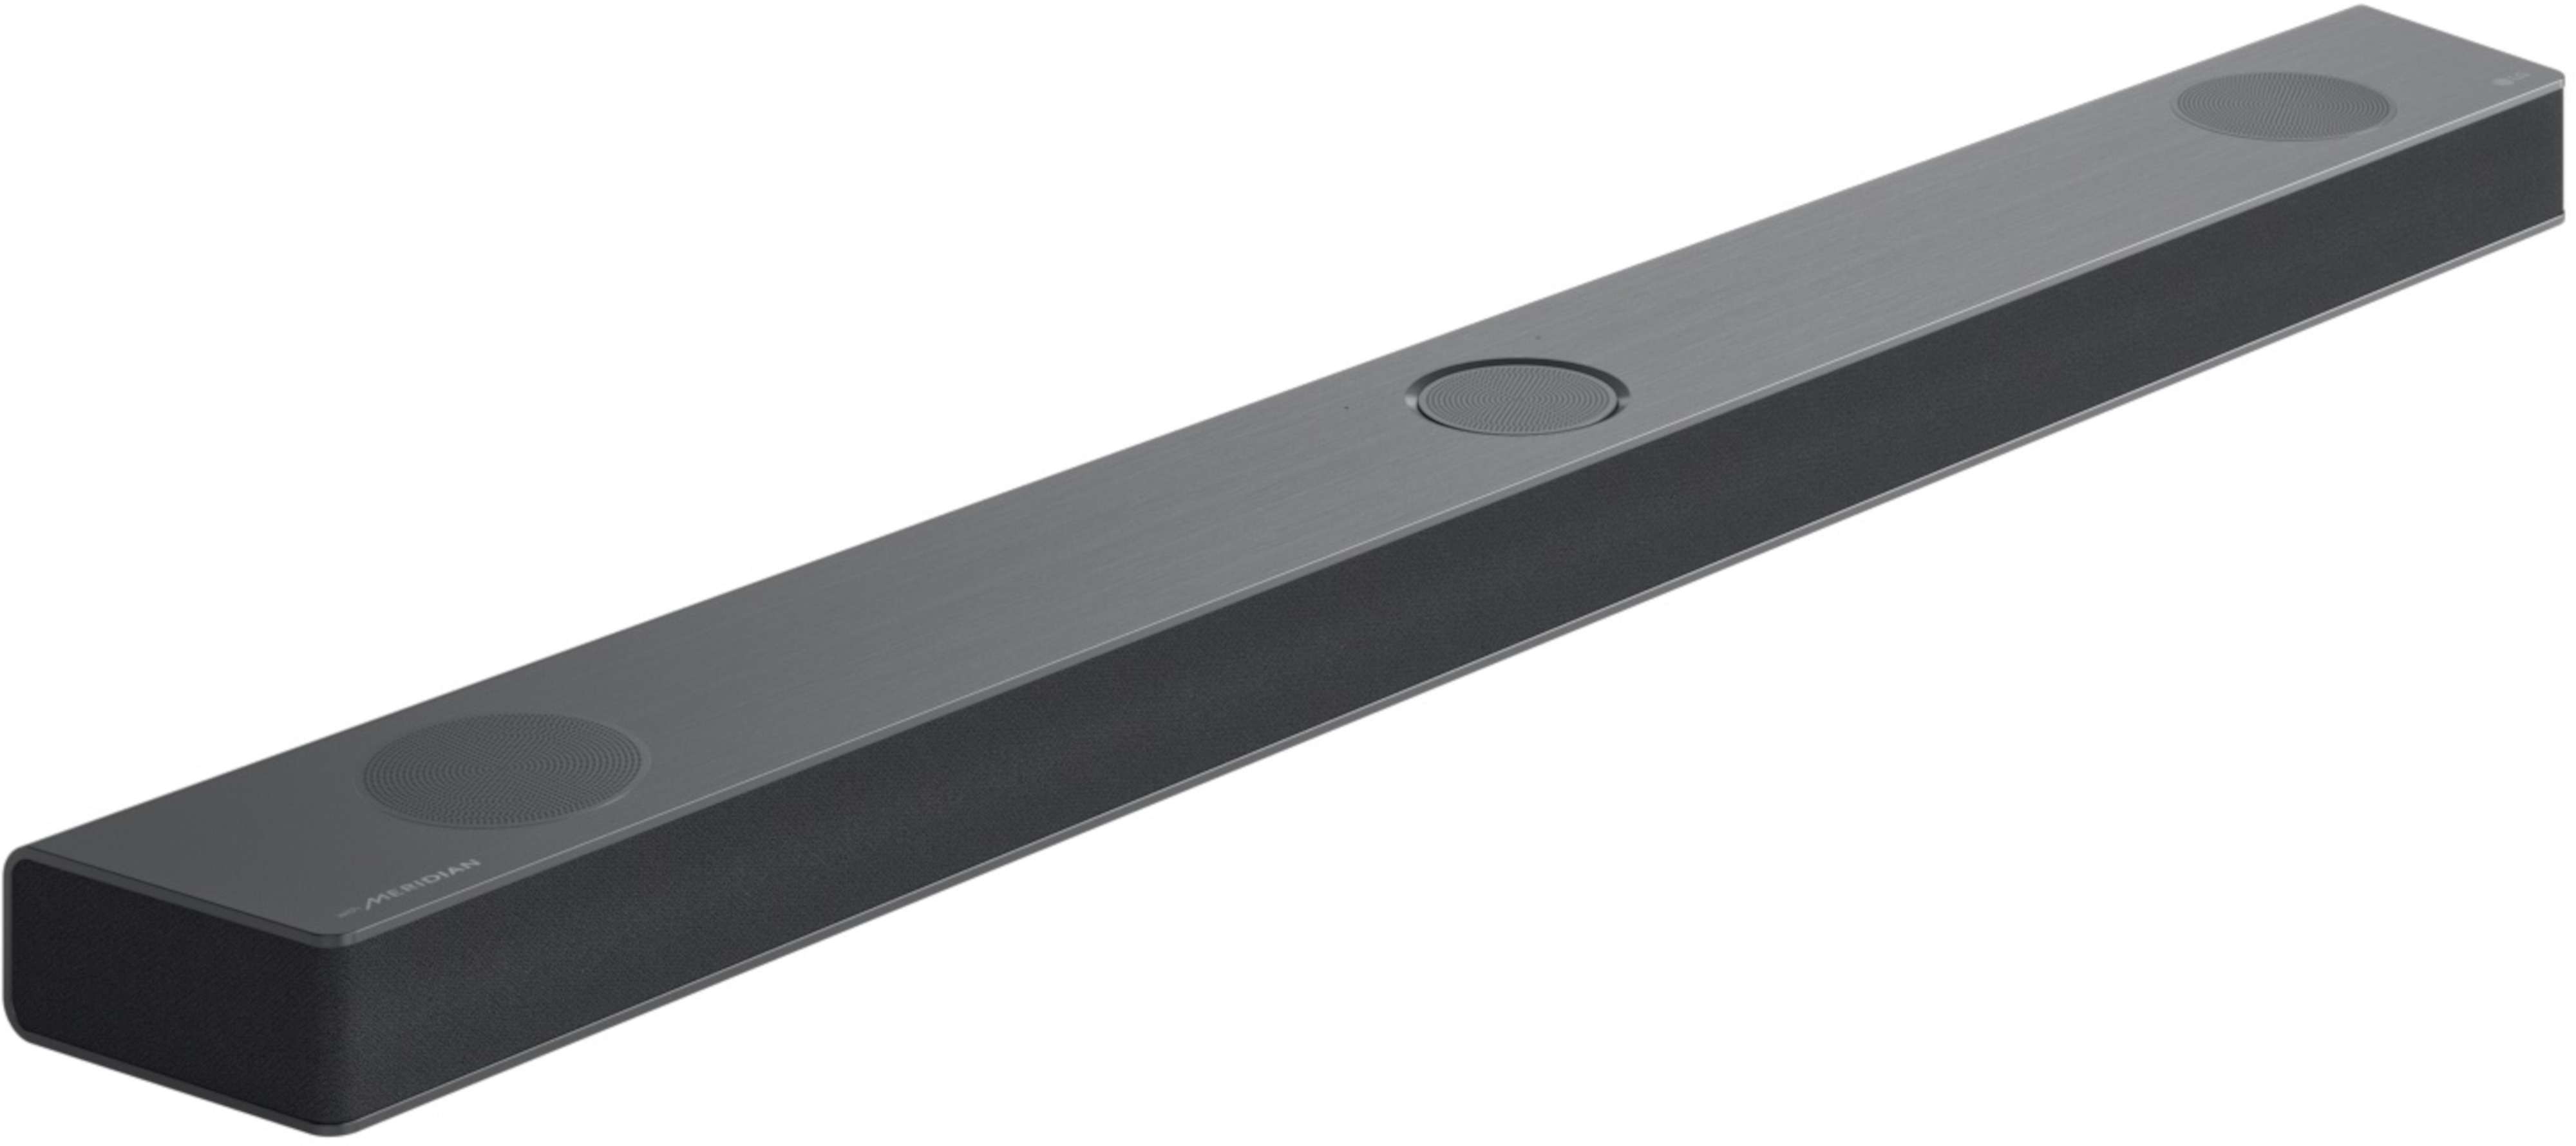 Steel LG DS95QR, Dark Soundbar, Silver